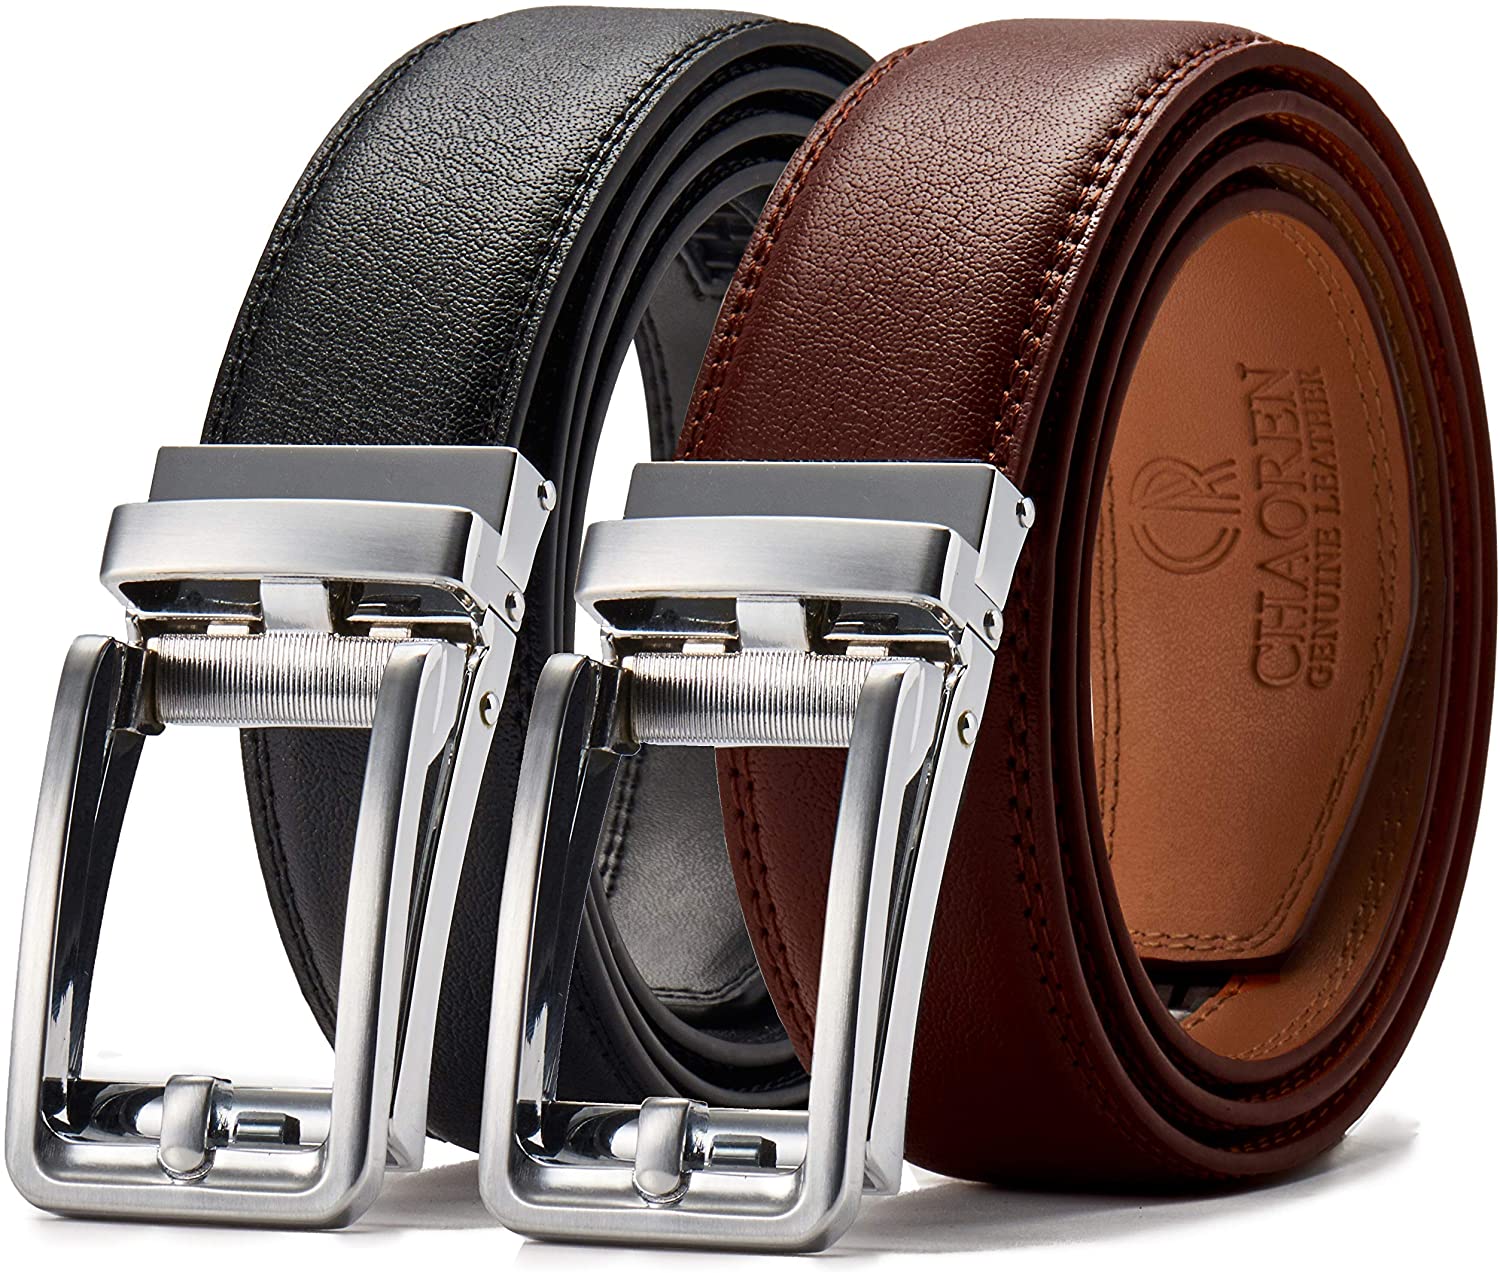 Leather Ratchet Dress Belt 2 Pack 1 3/8 Chaoren Click Adjustable Belt Comfort with Slide Buckle Trim to Exact Fit